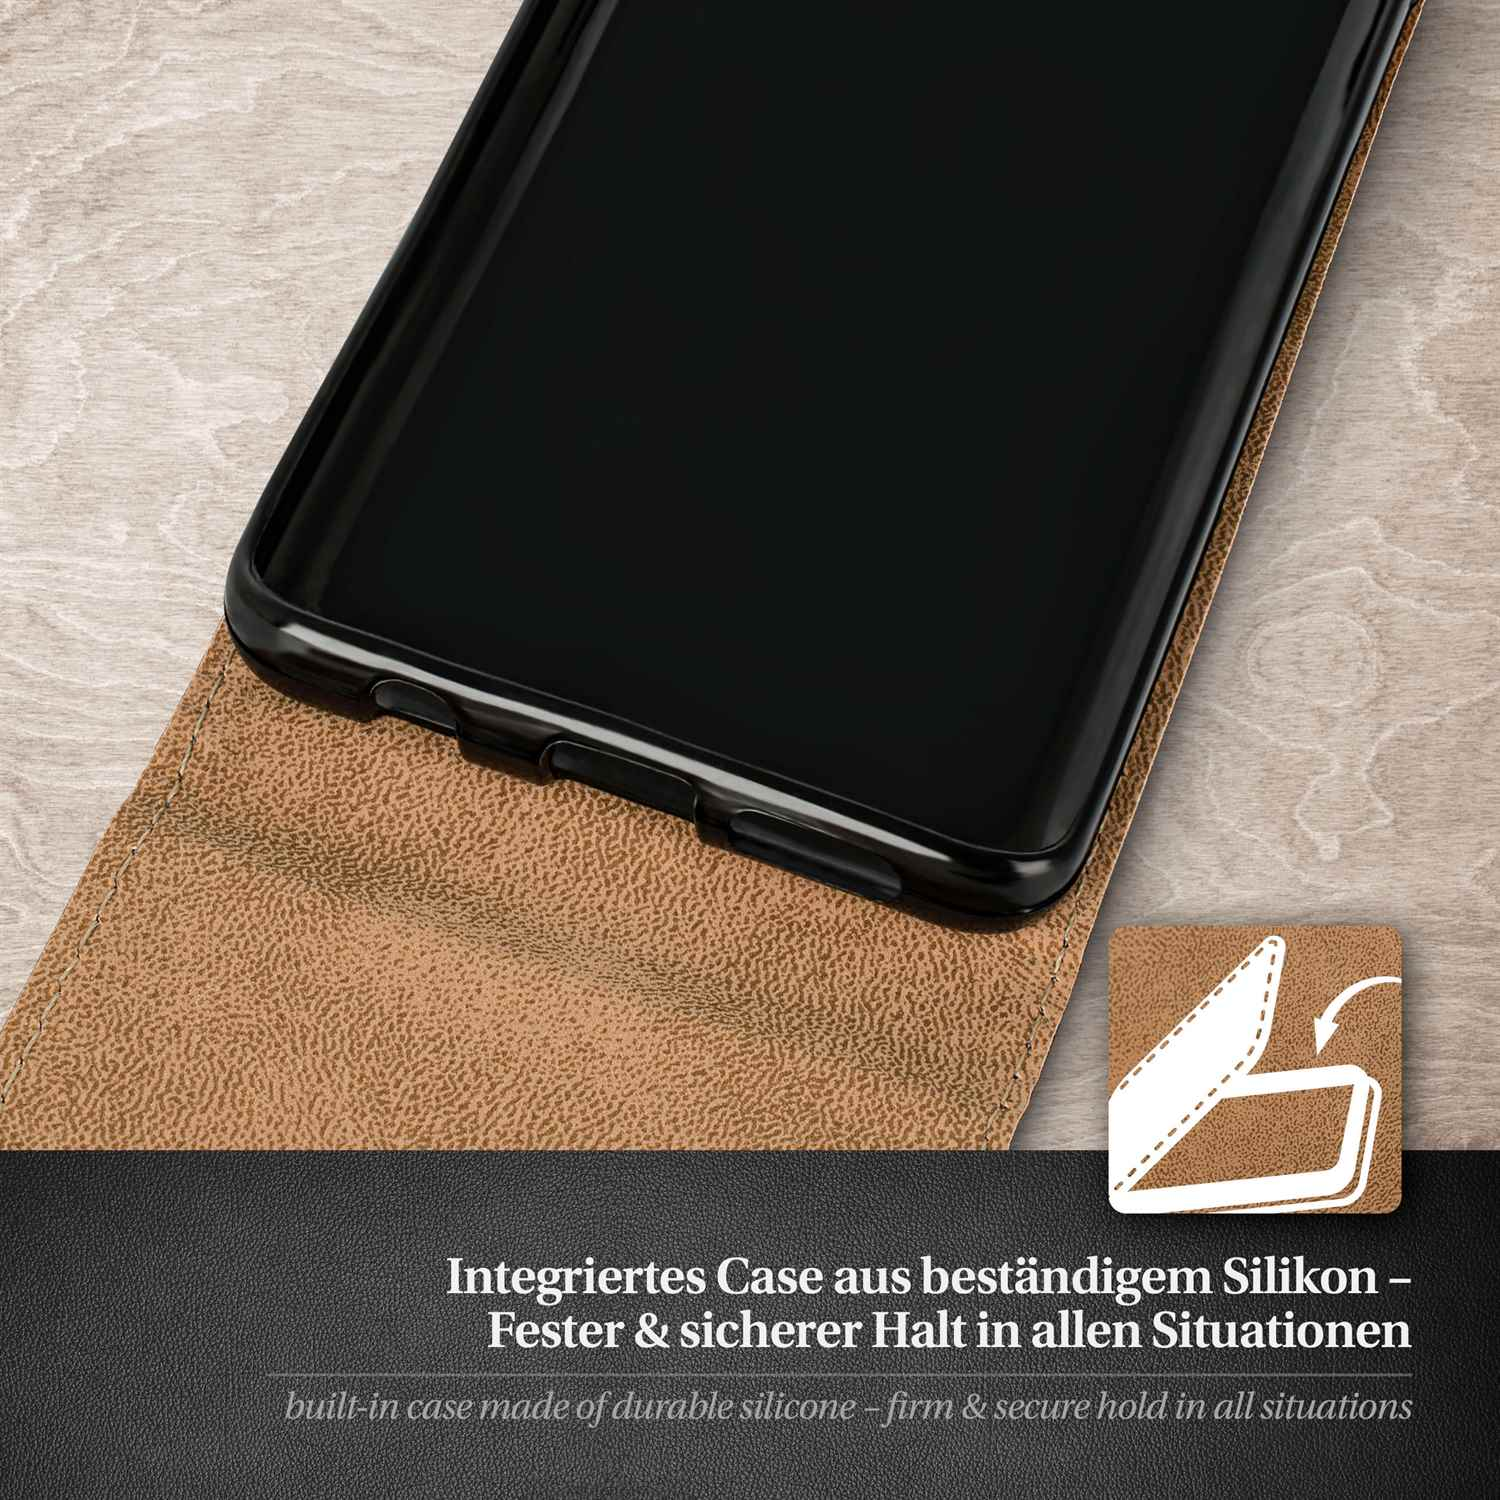 S21 Samsung, Case, Galaxy Berry-Fuchsia Flip Cover, FE MOEX 5G, Flip